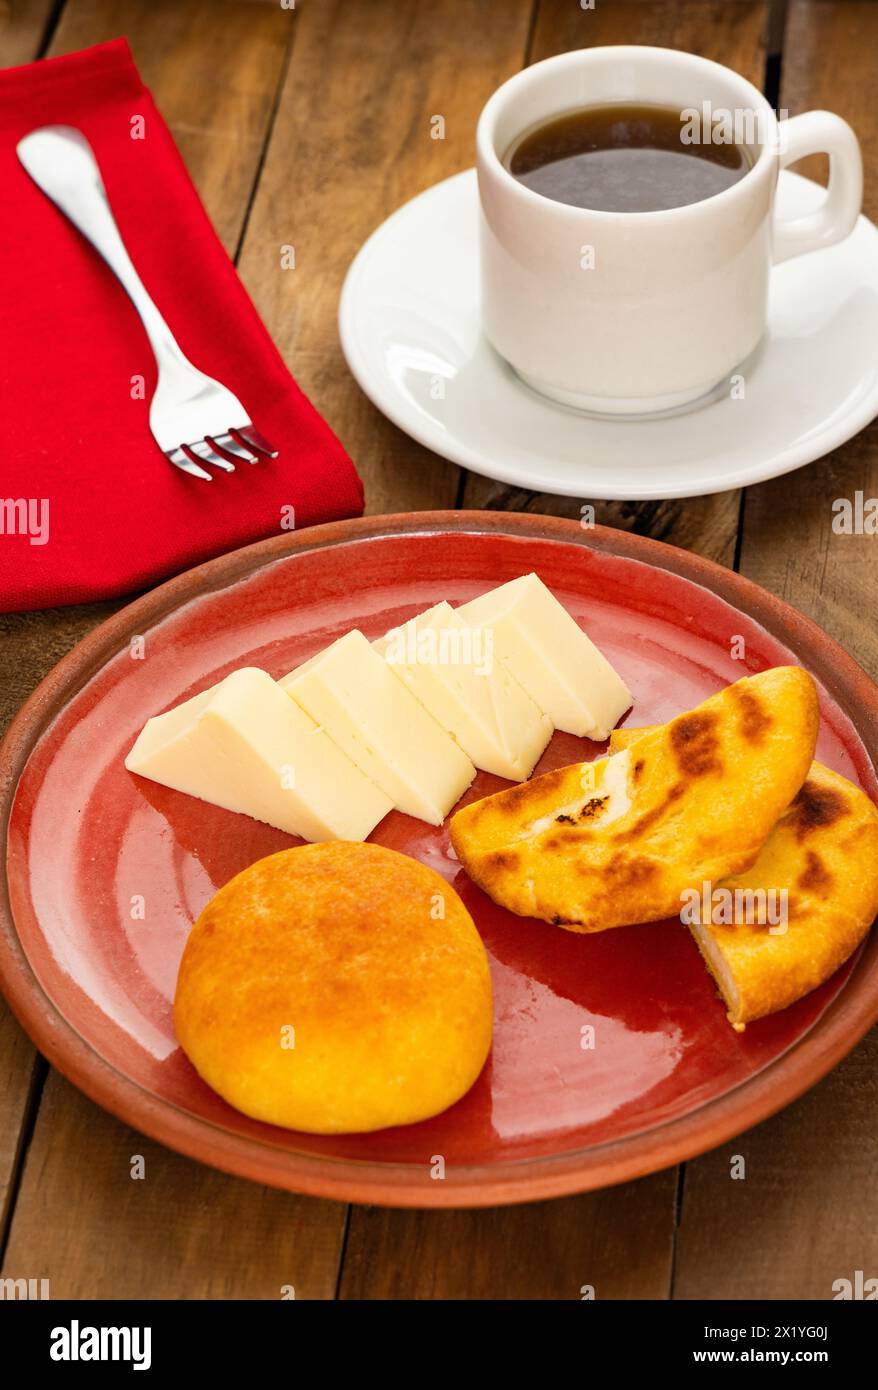 Arepa, almojabana, cheese and hot aguapanela - Typical Colombian breakfast Stock Photo